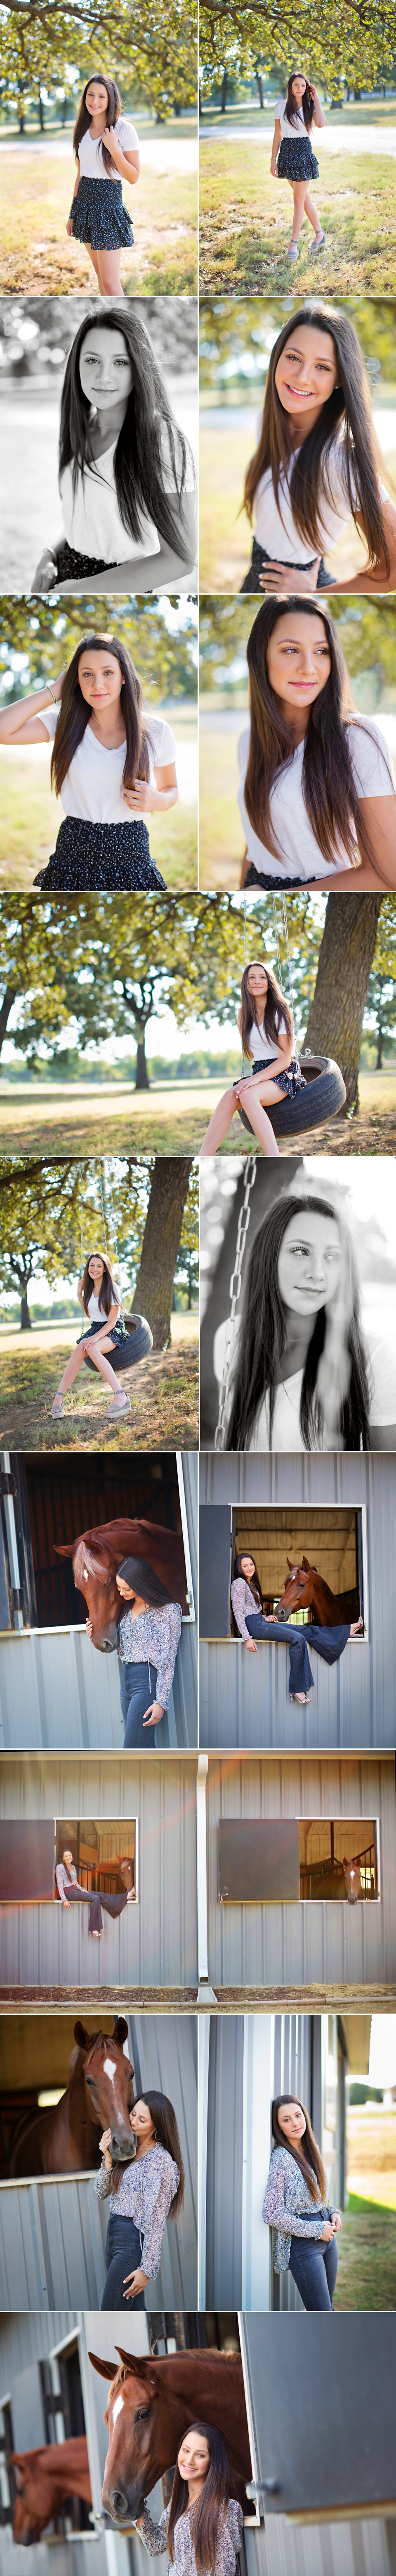 Collage of girl's senior portrait session